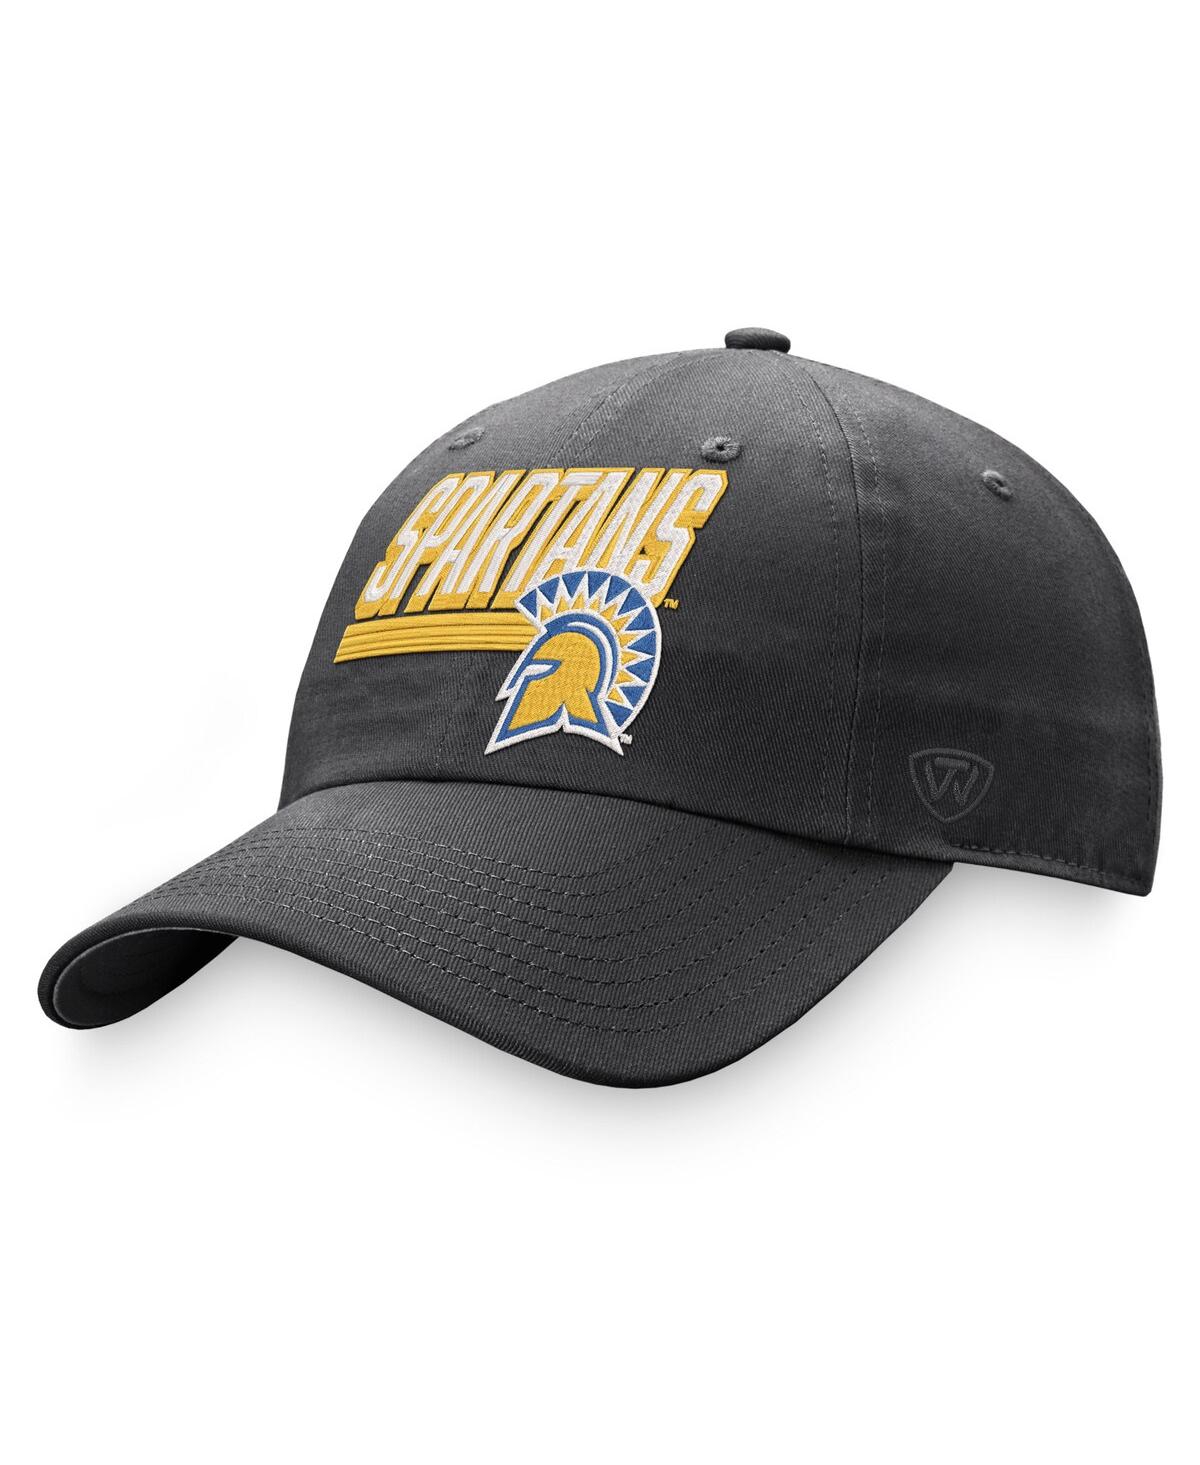 Shop Top Of The World Men's  Charcoal San Jose State Spartans Slice Adjustable Hat